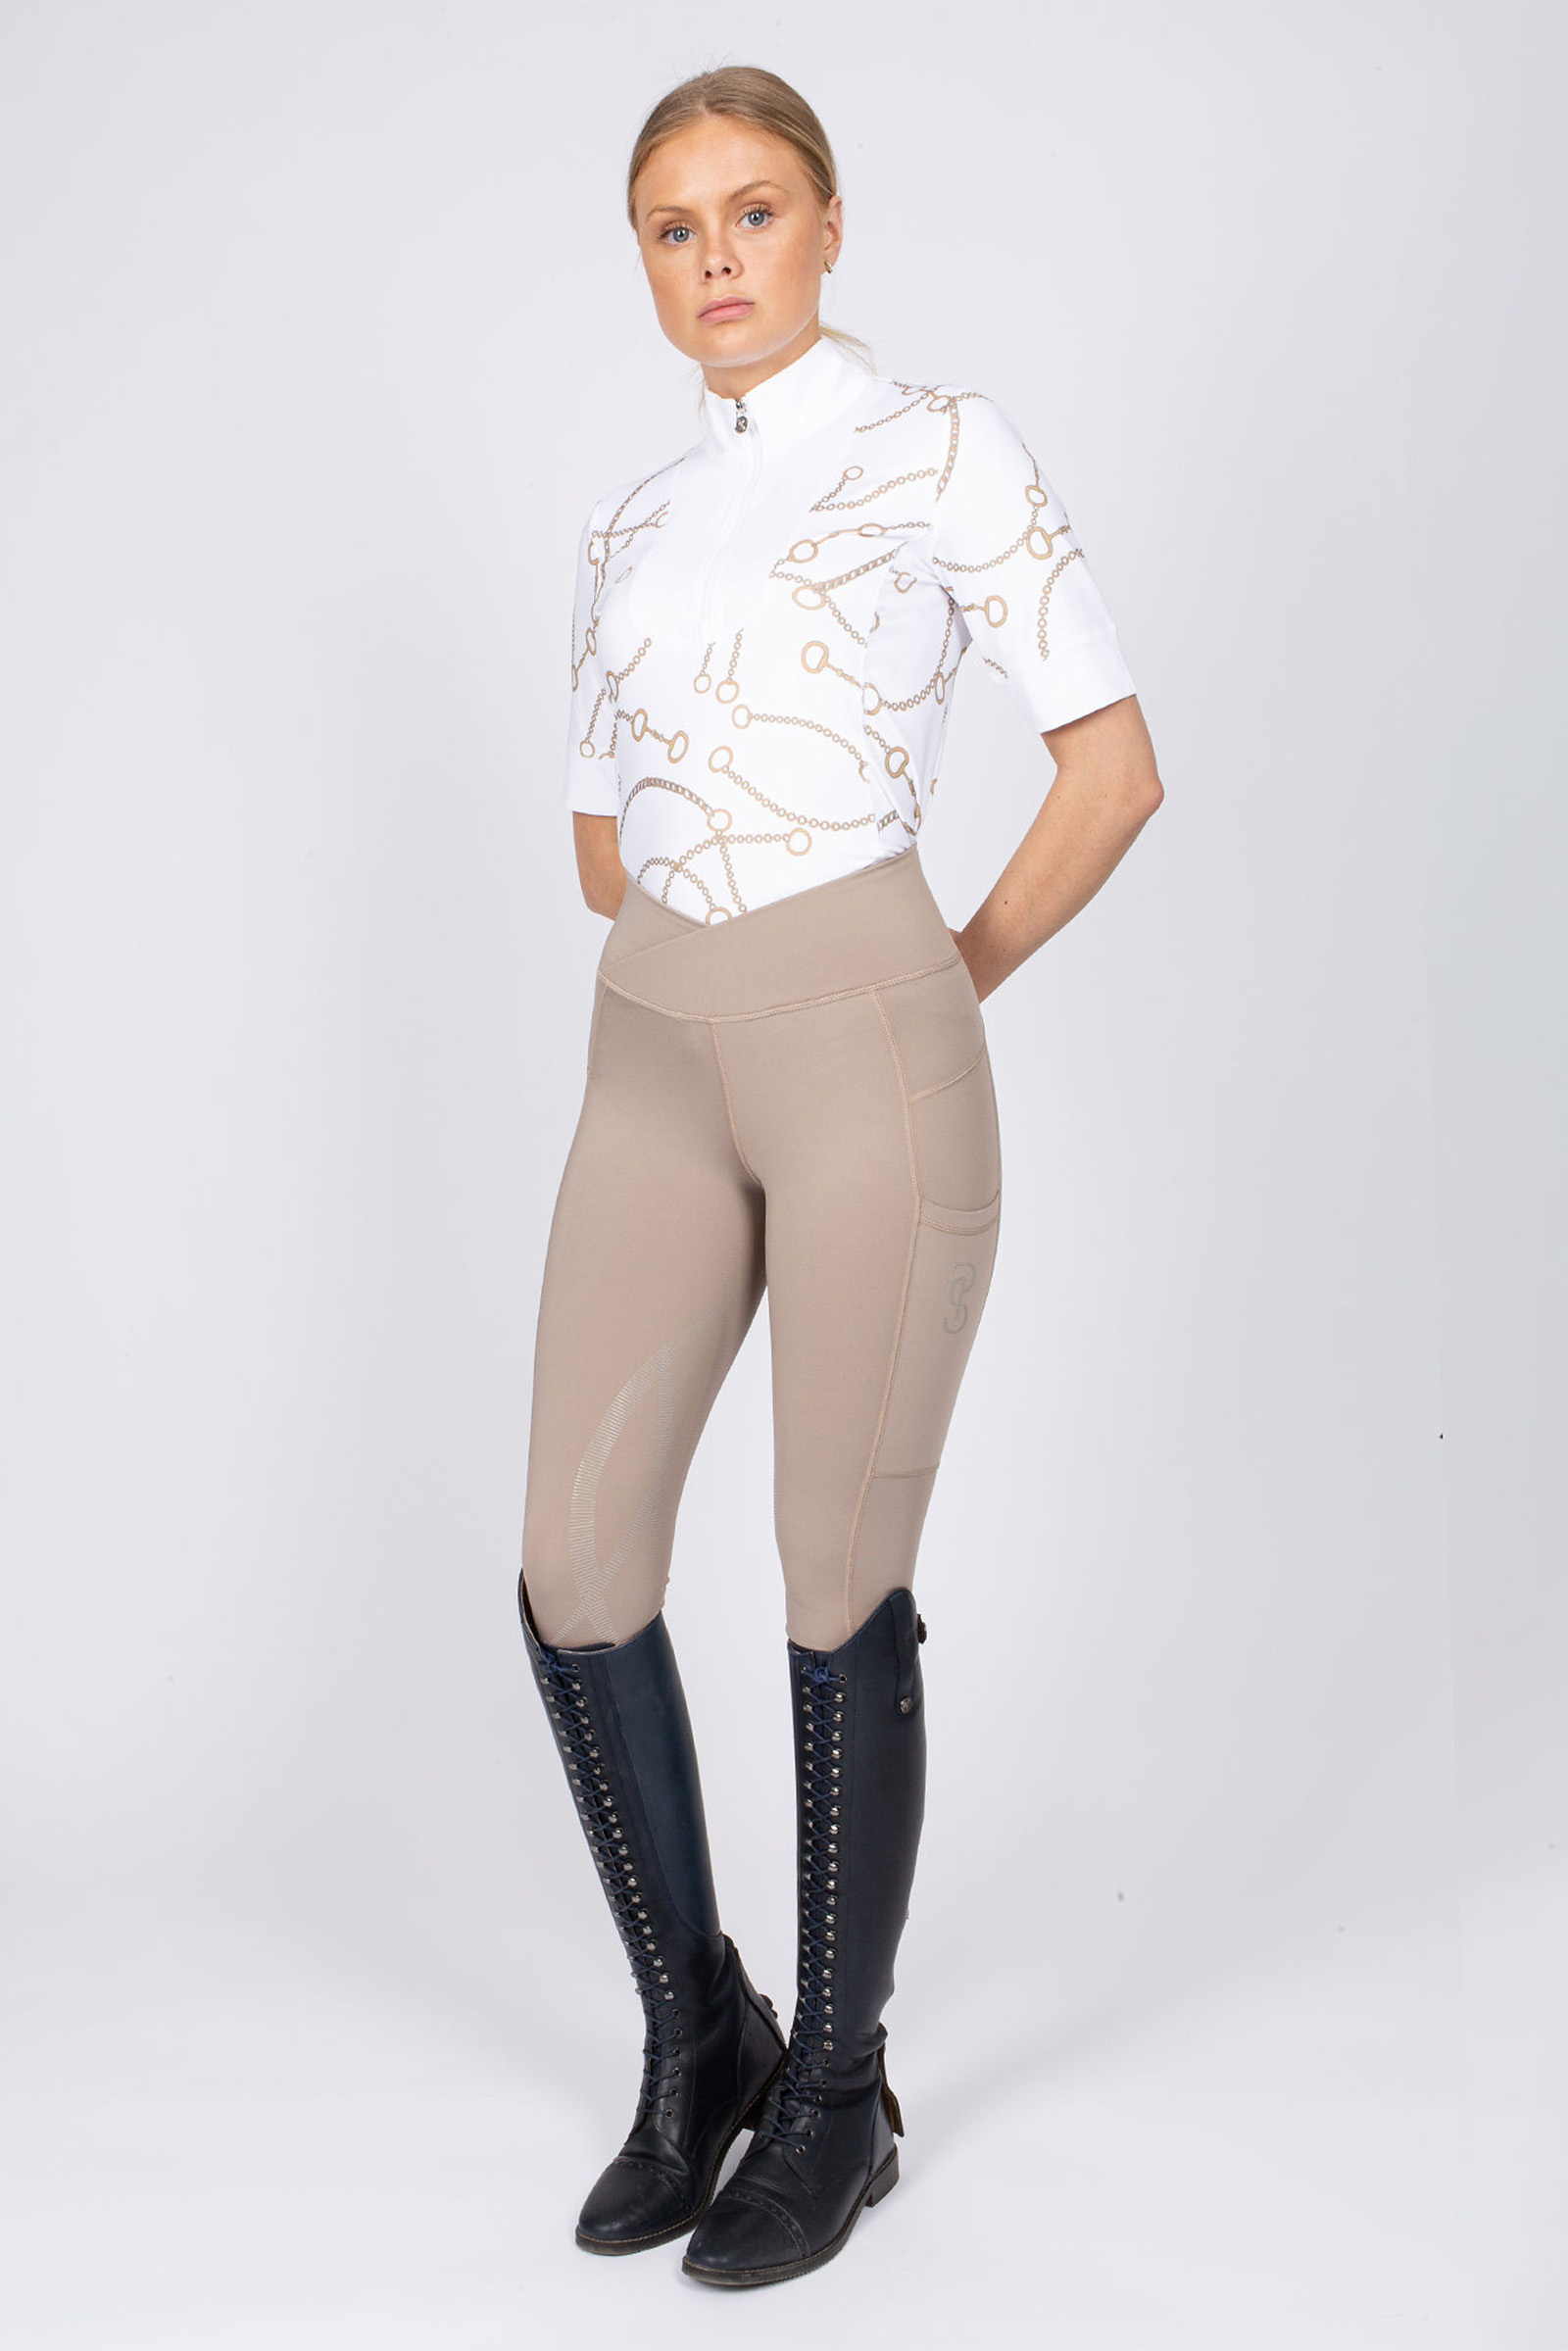 Pantalon legging equitation femme PSofSweden modèle Helena taille 40